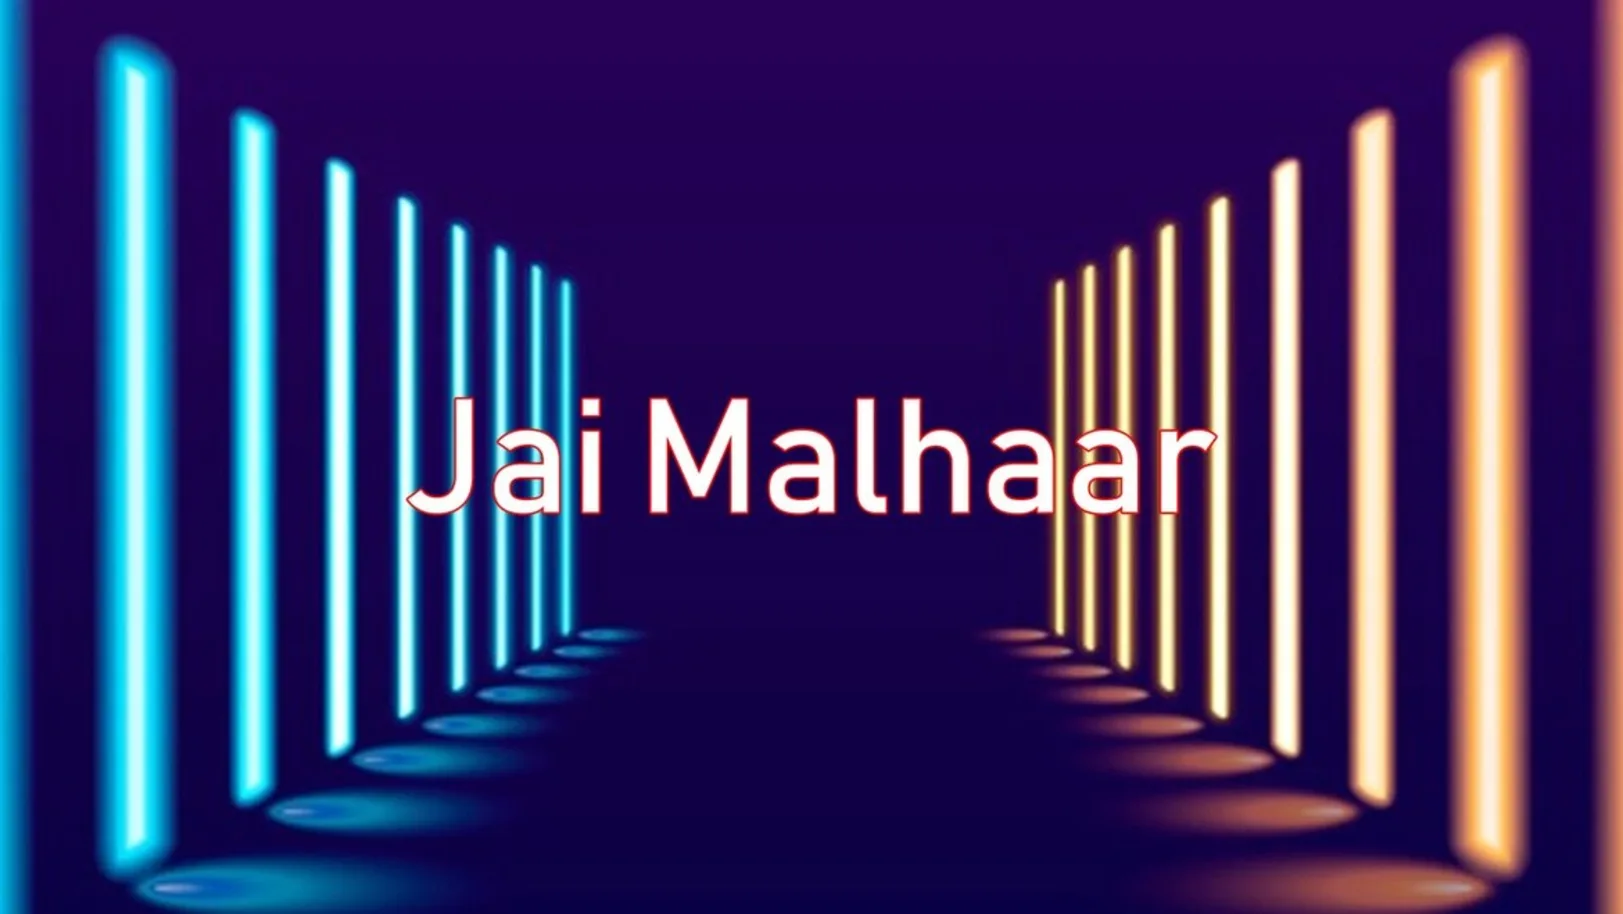 Jai Malhar Streaming Now On Zee Talkies